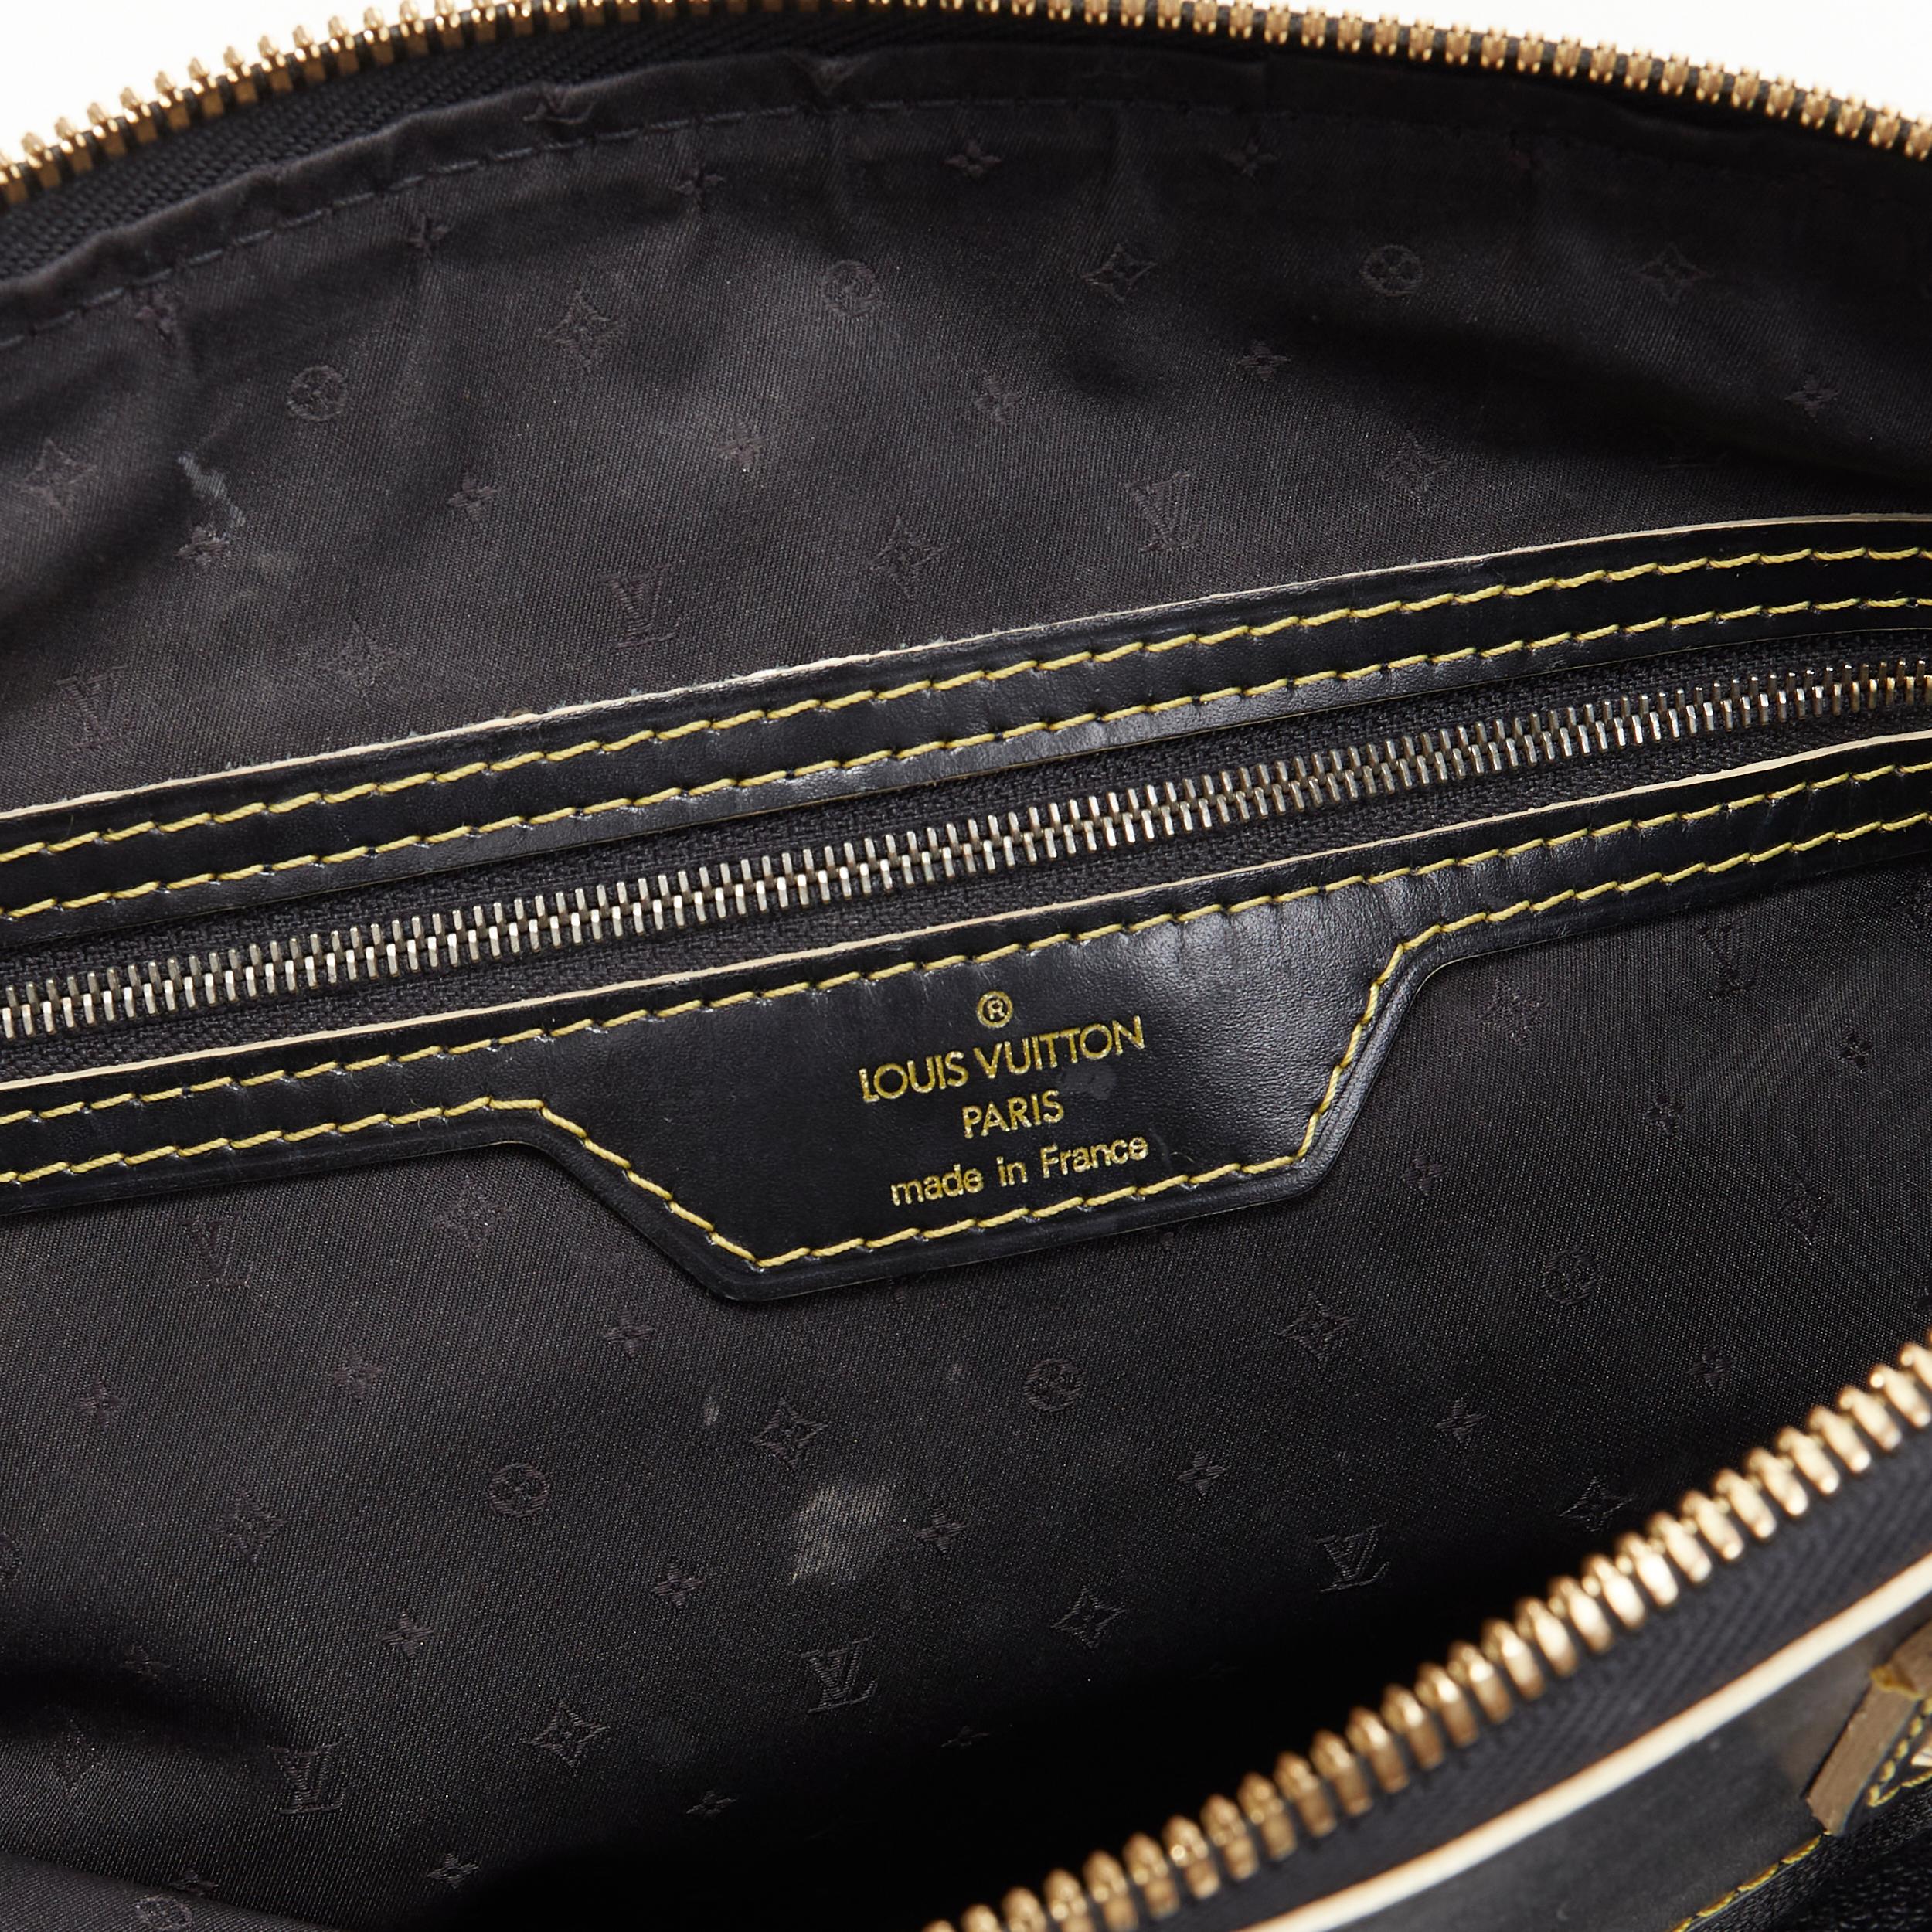 LOUIS VUITTON Lockit PM Suhali black yellow stitching top handle satchel bag 4